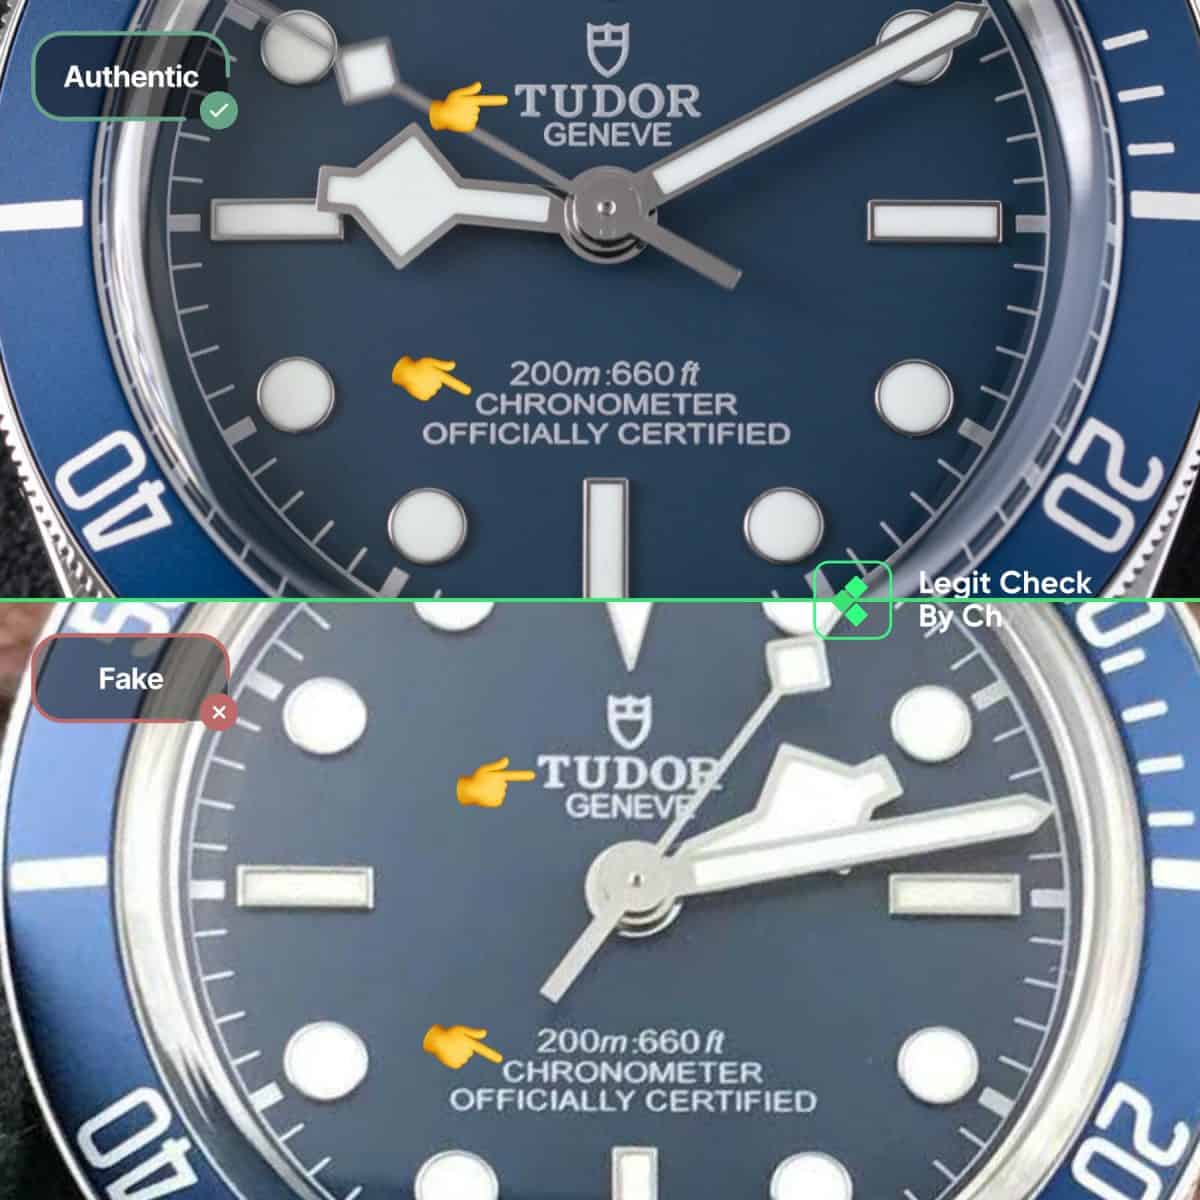 fake vs real tudor watch